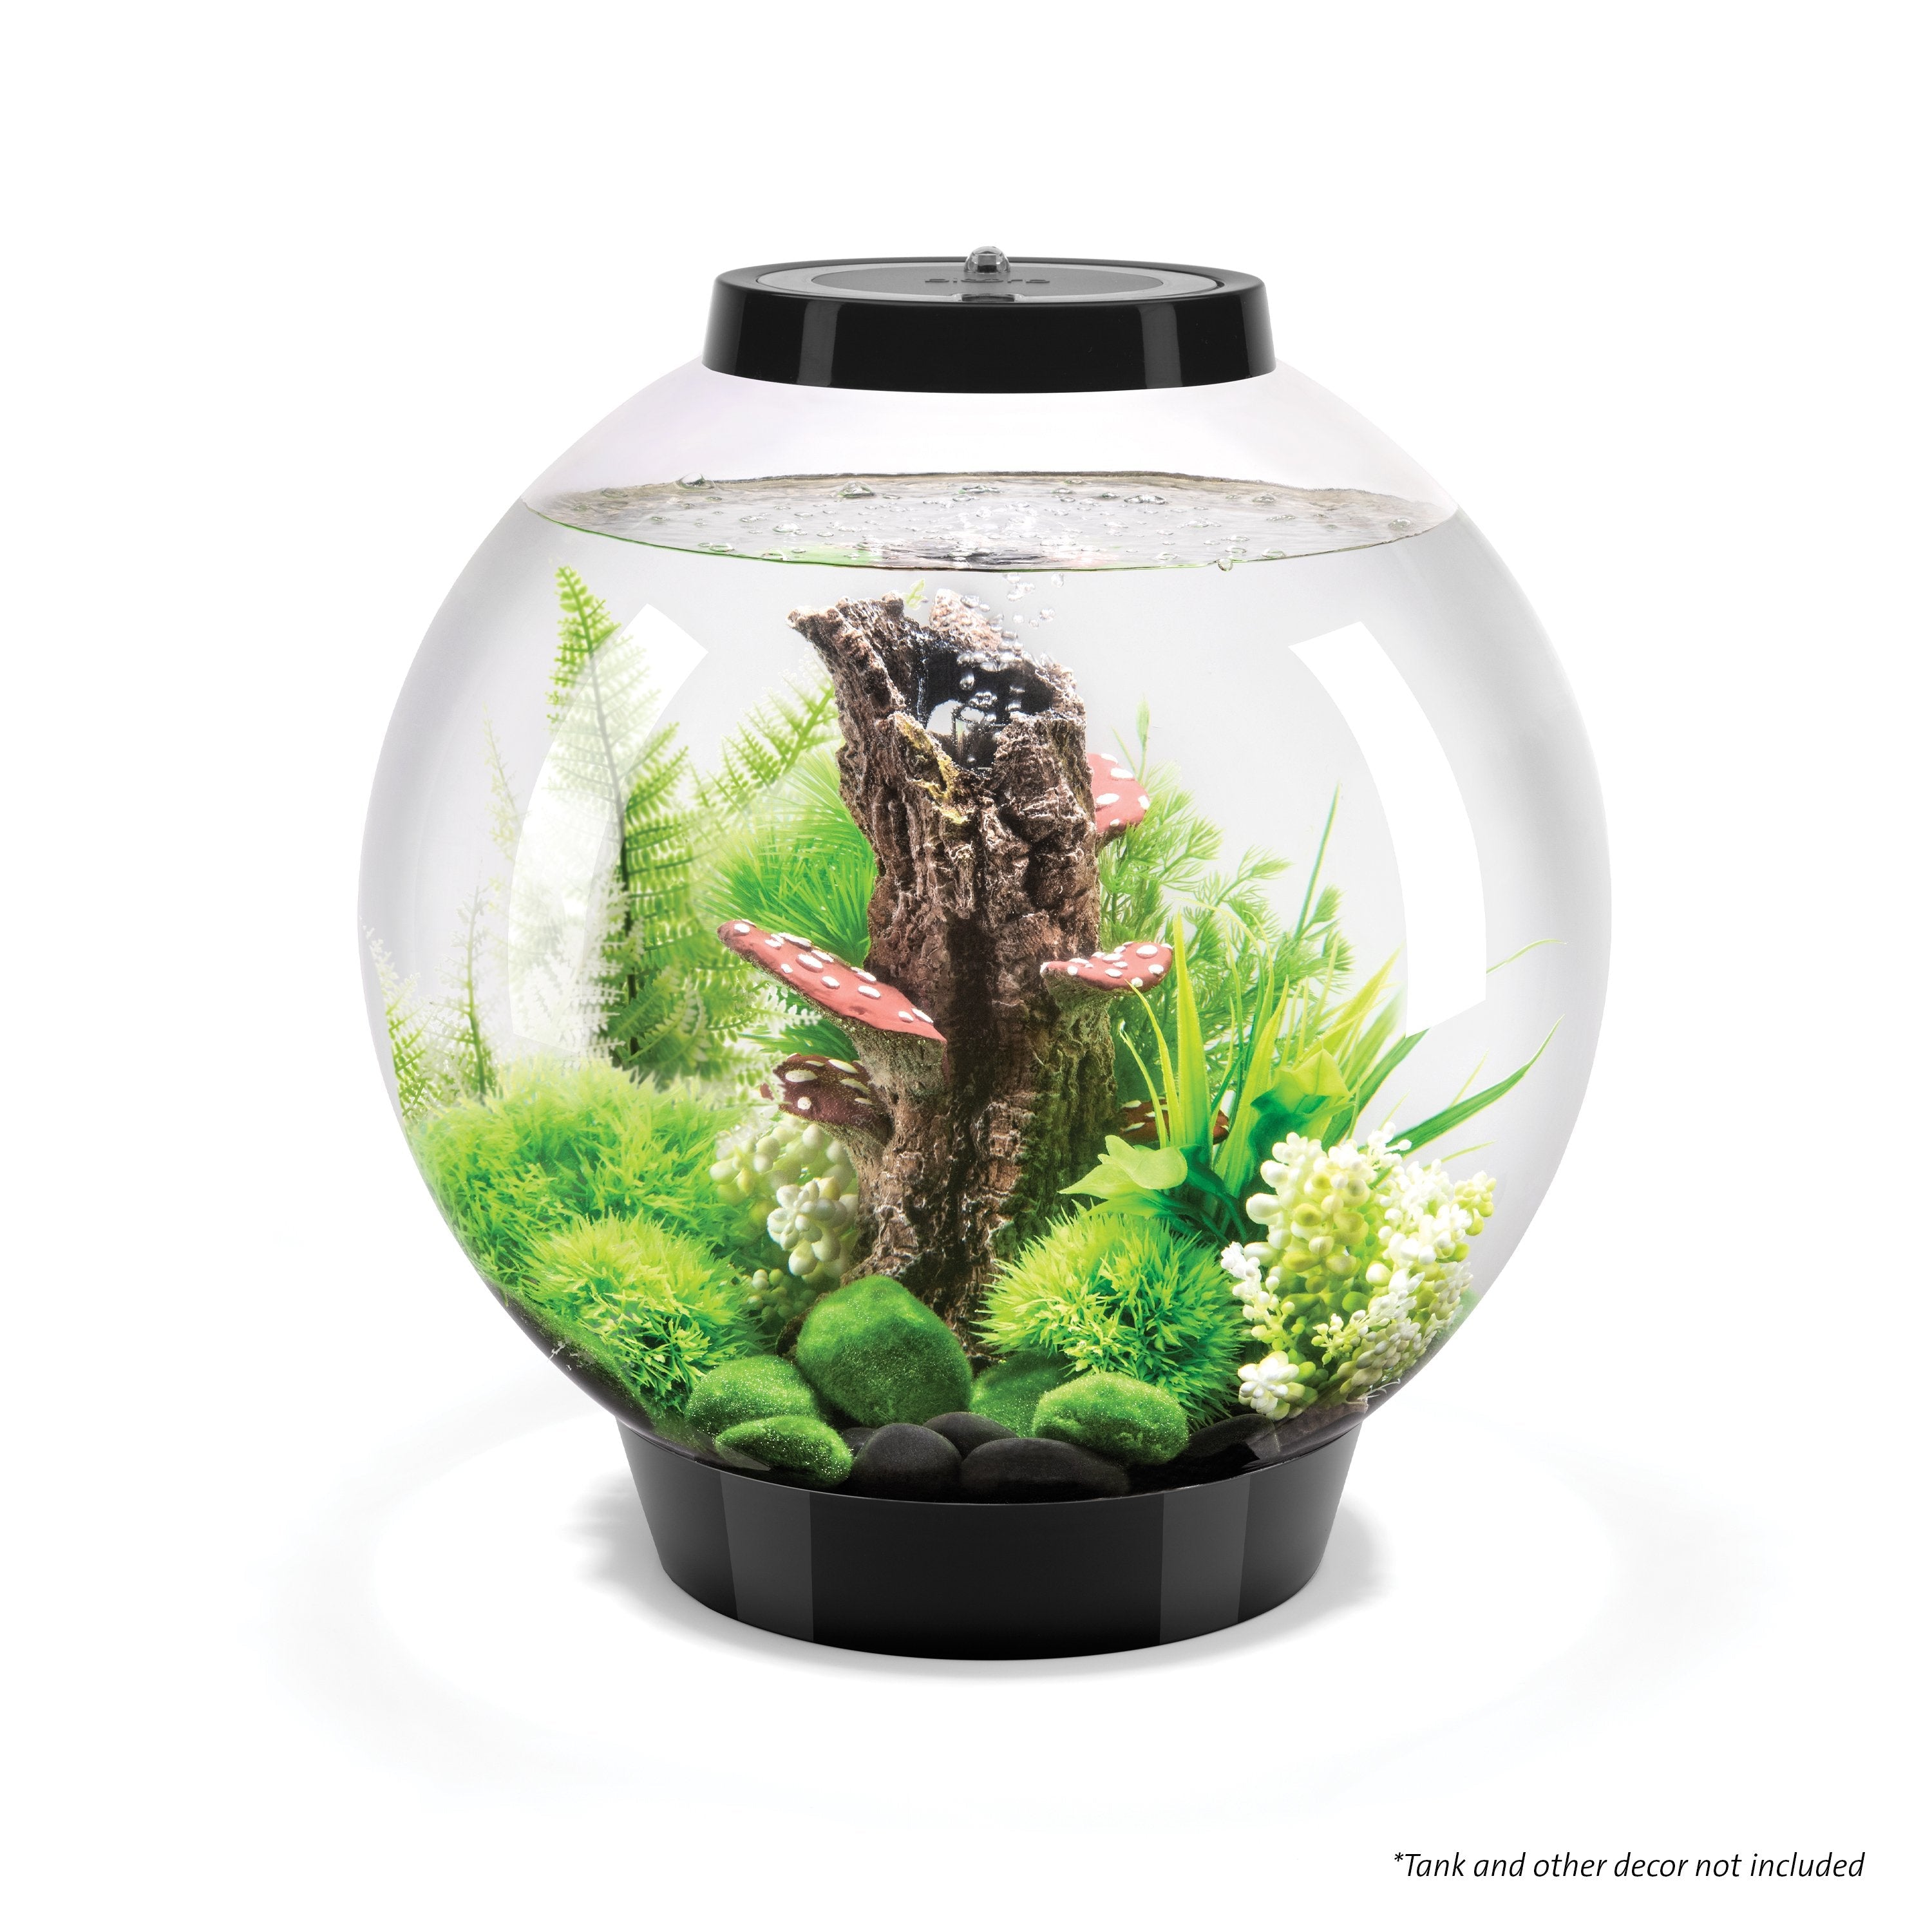 Get inspiration for your aquarium design by using the biOrb Winter Fern Aquarium Plant Set of 2